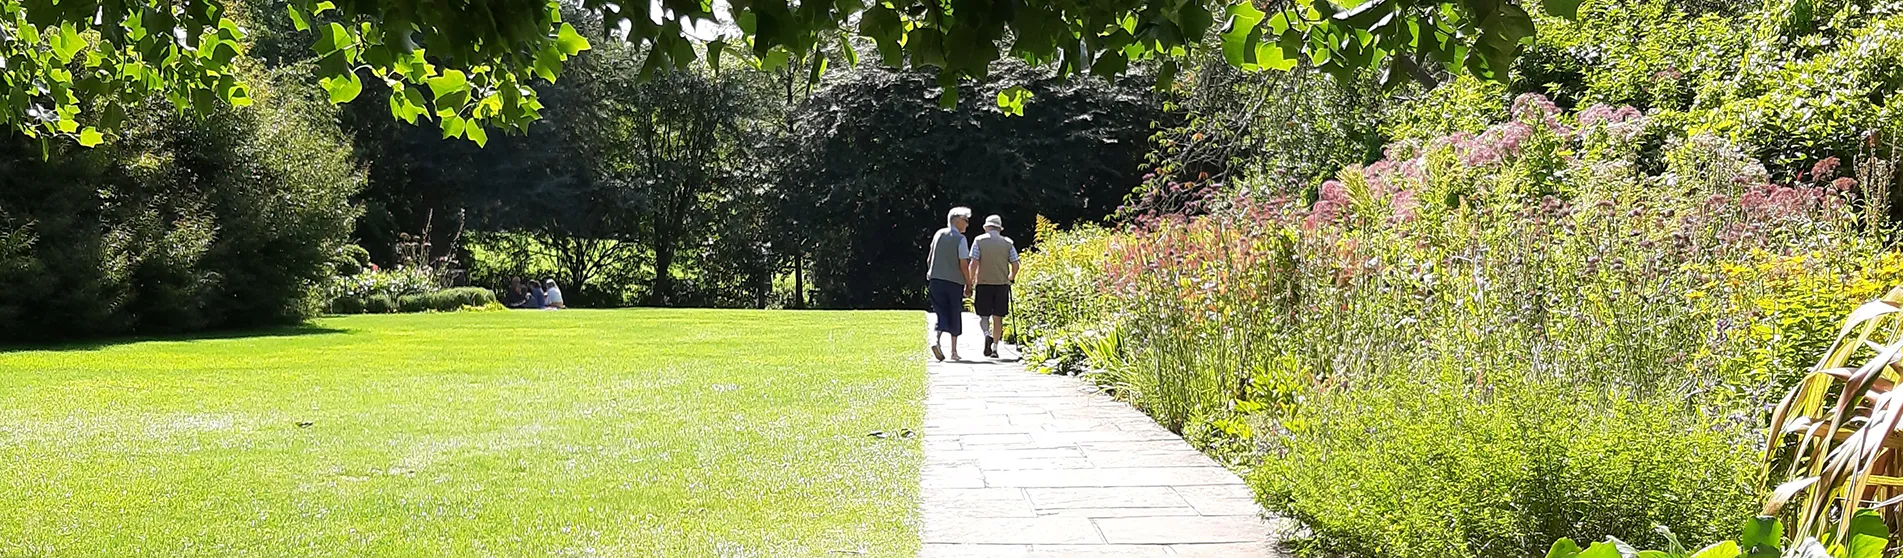 elderly couple walking in garden hero csi 1903x558